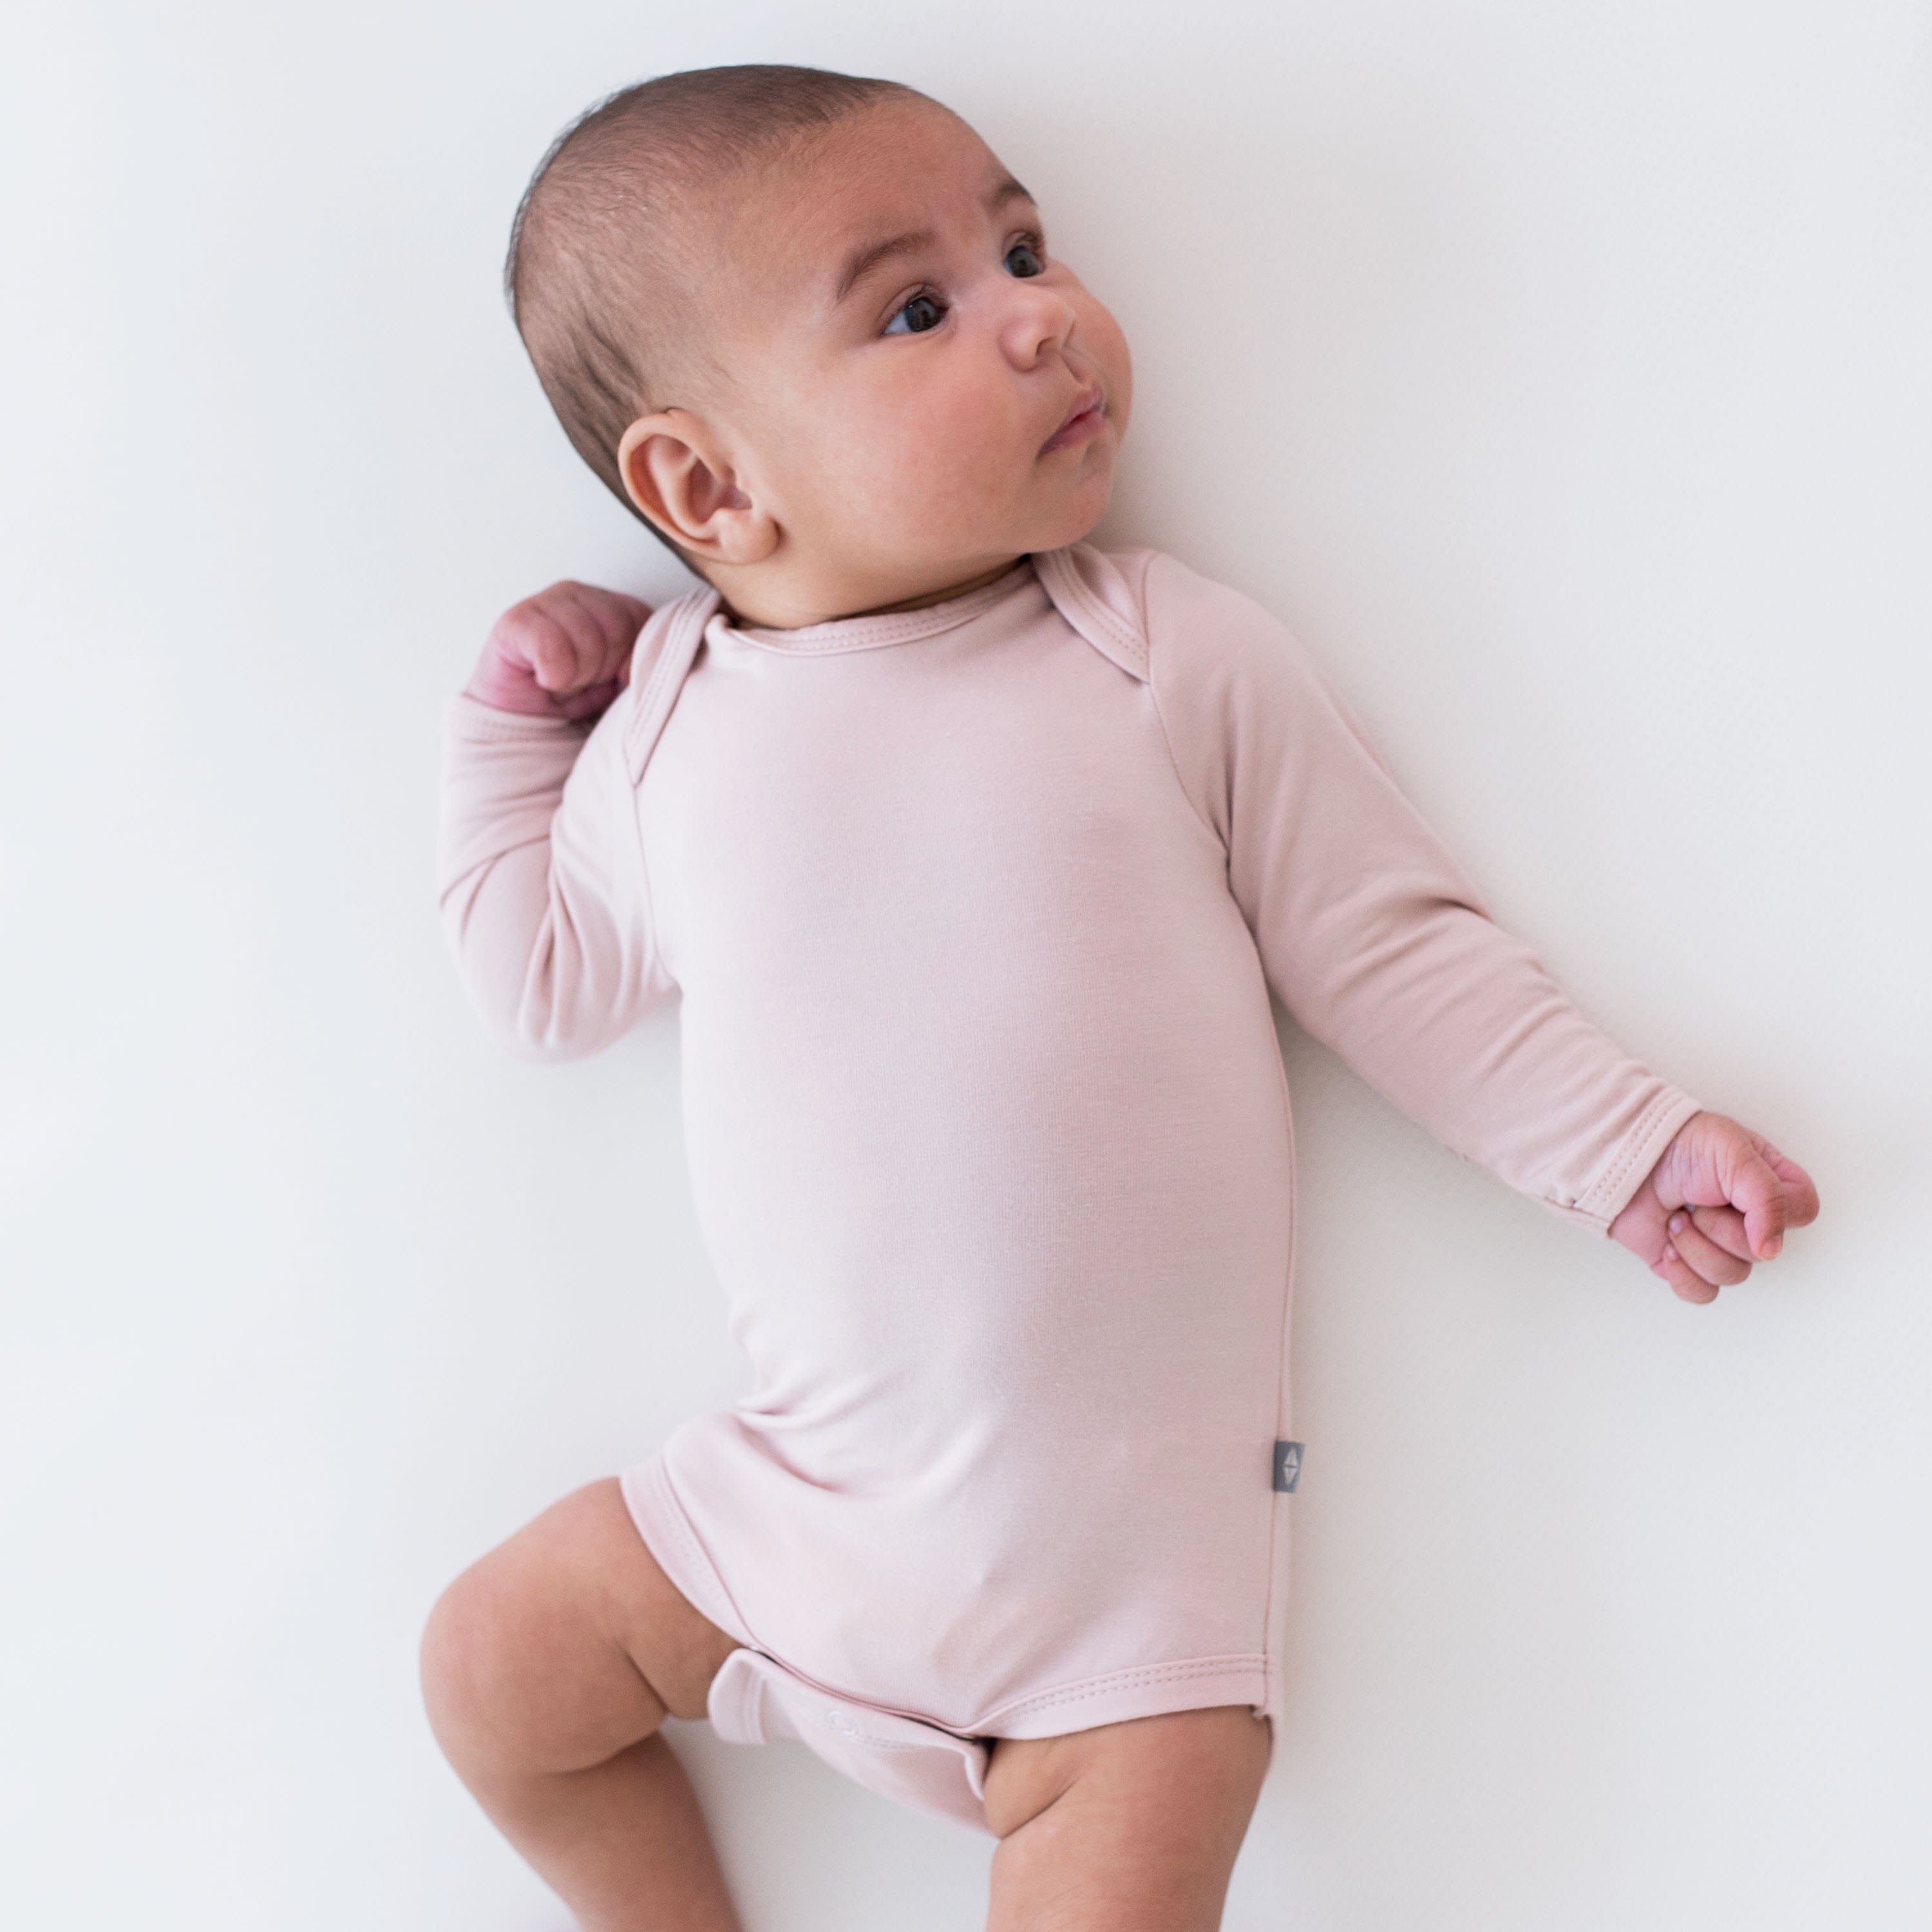 Baby wearing Kyte Baby Long Sleeve infant Bodysuit in Blush